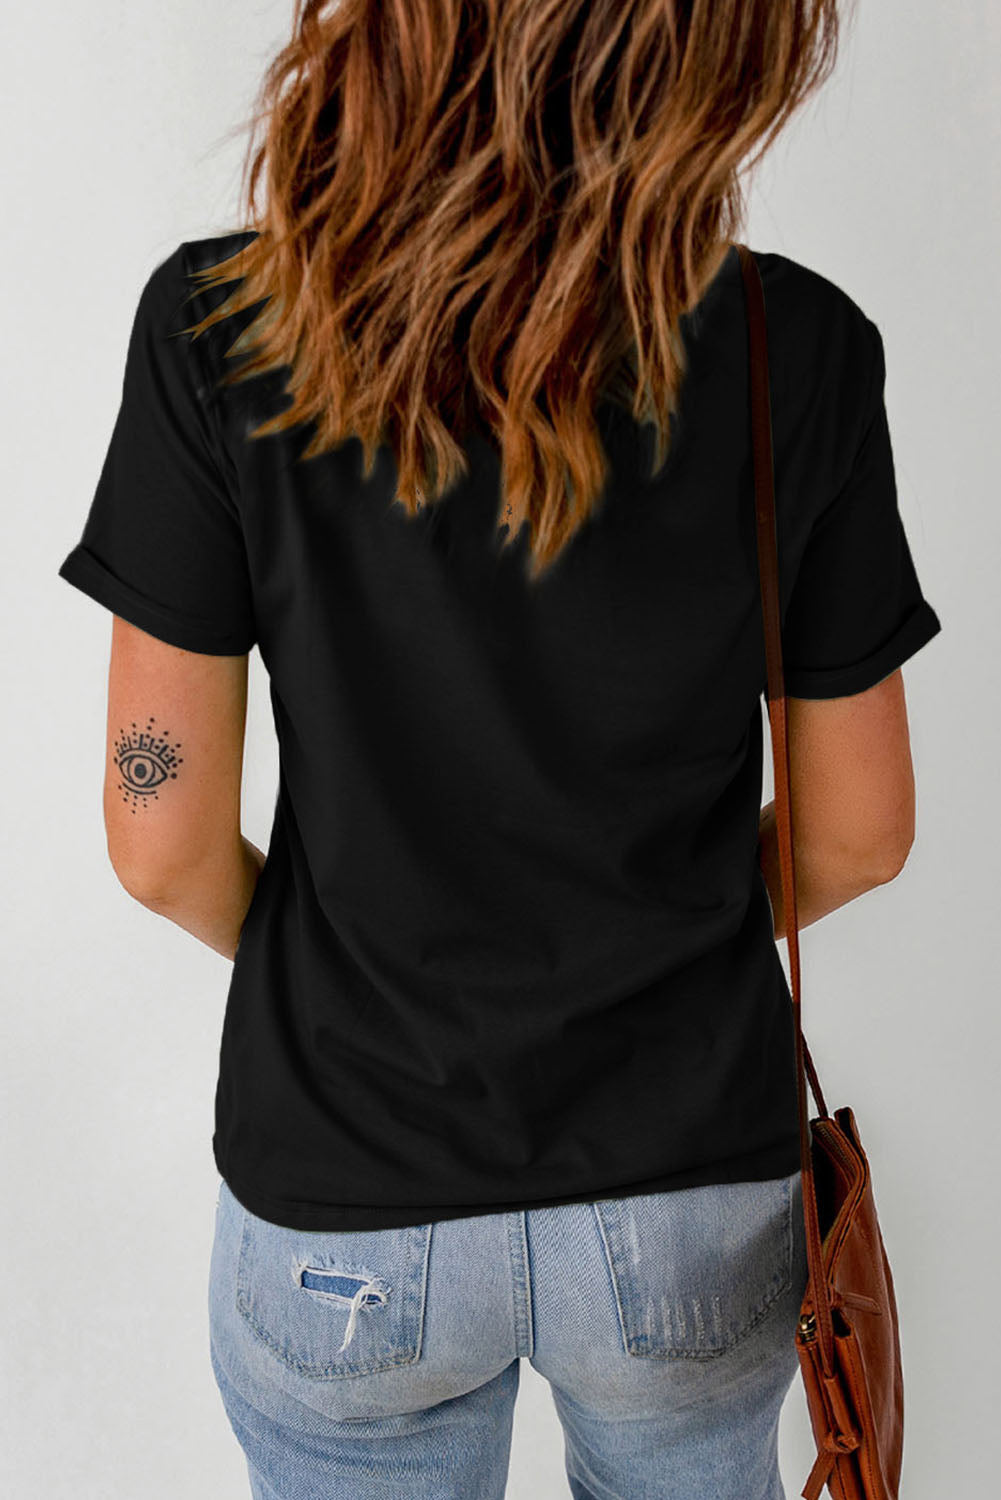 Be Kind Short Sleeve Black T-Shirt ( S - 2X)